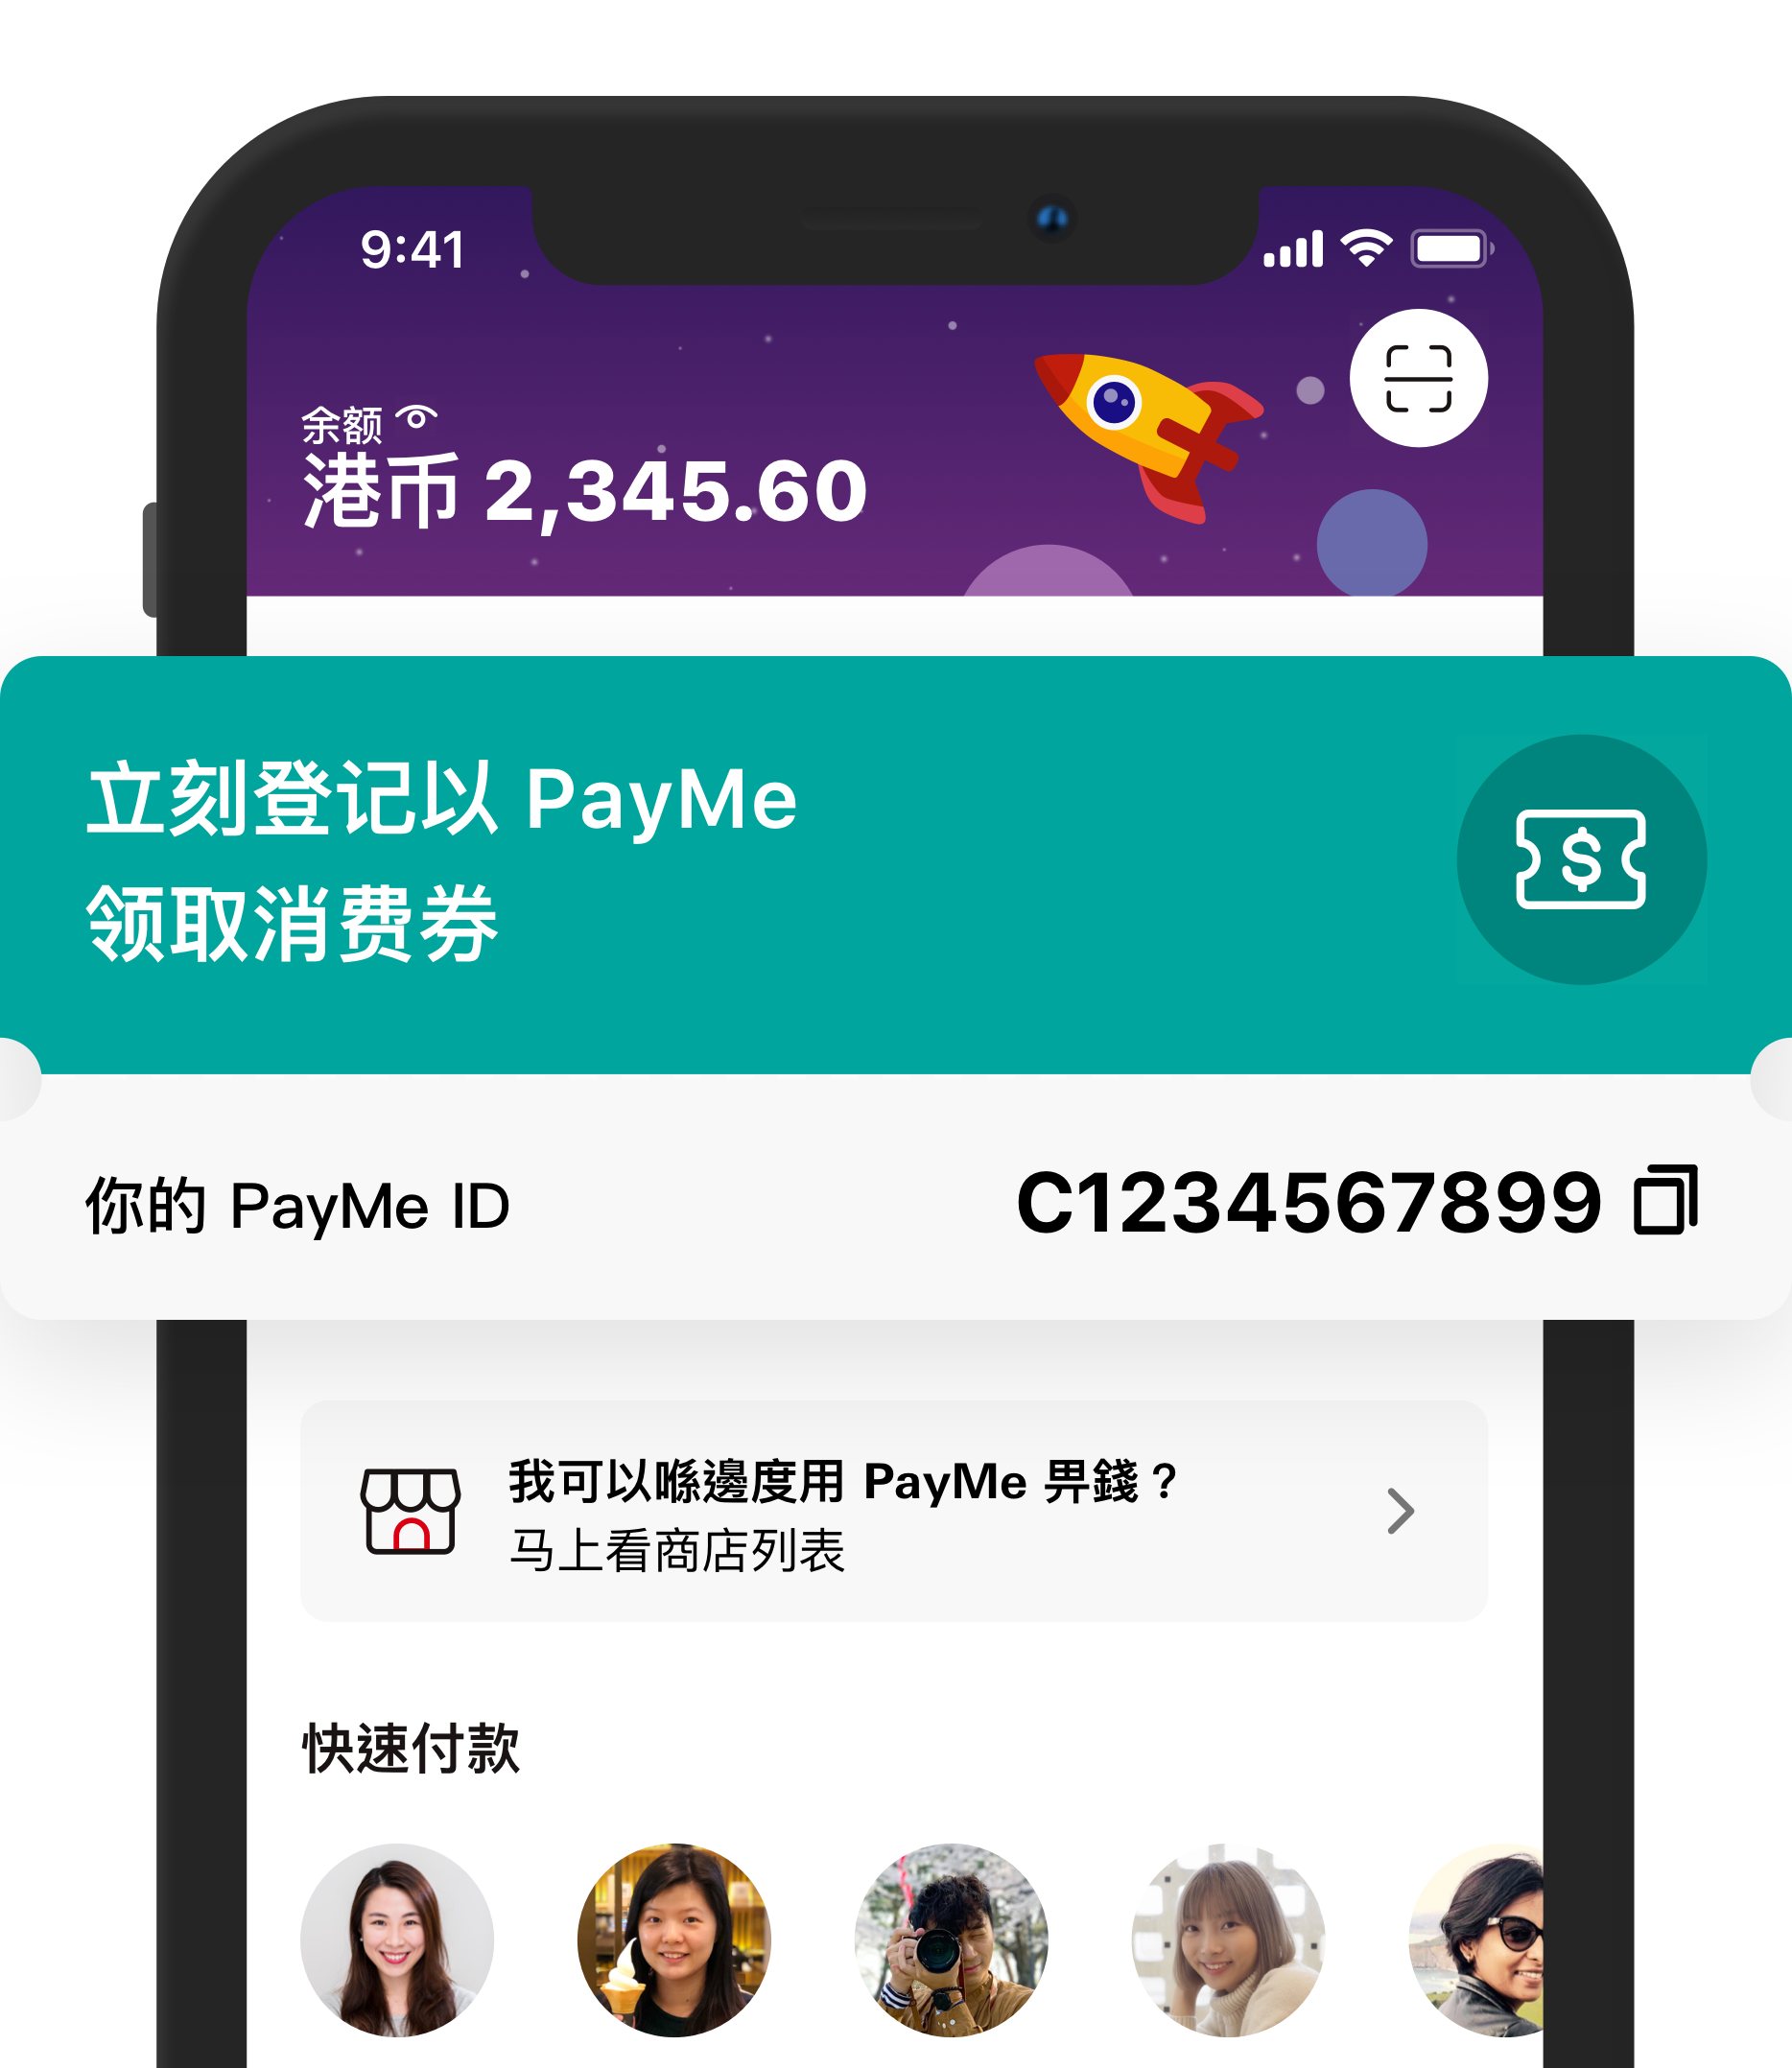 PayMe from HSBC 应用程式内设有消费券计划专区，用户可进入专区查看其帐户的相关号码（即是用户的 PayMe ID）